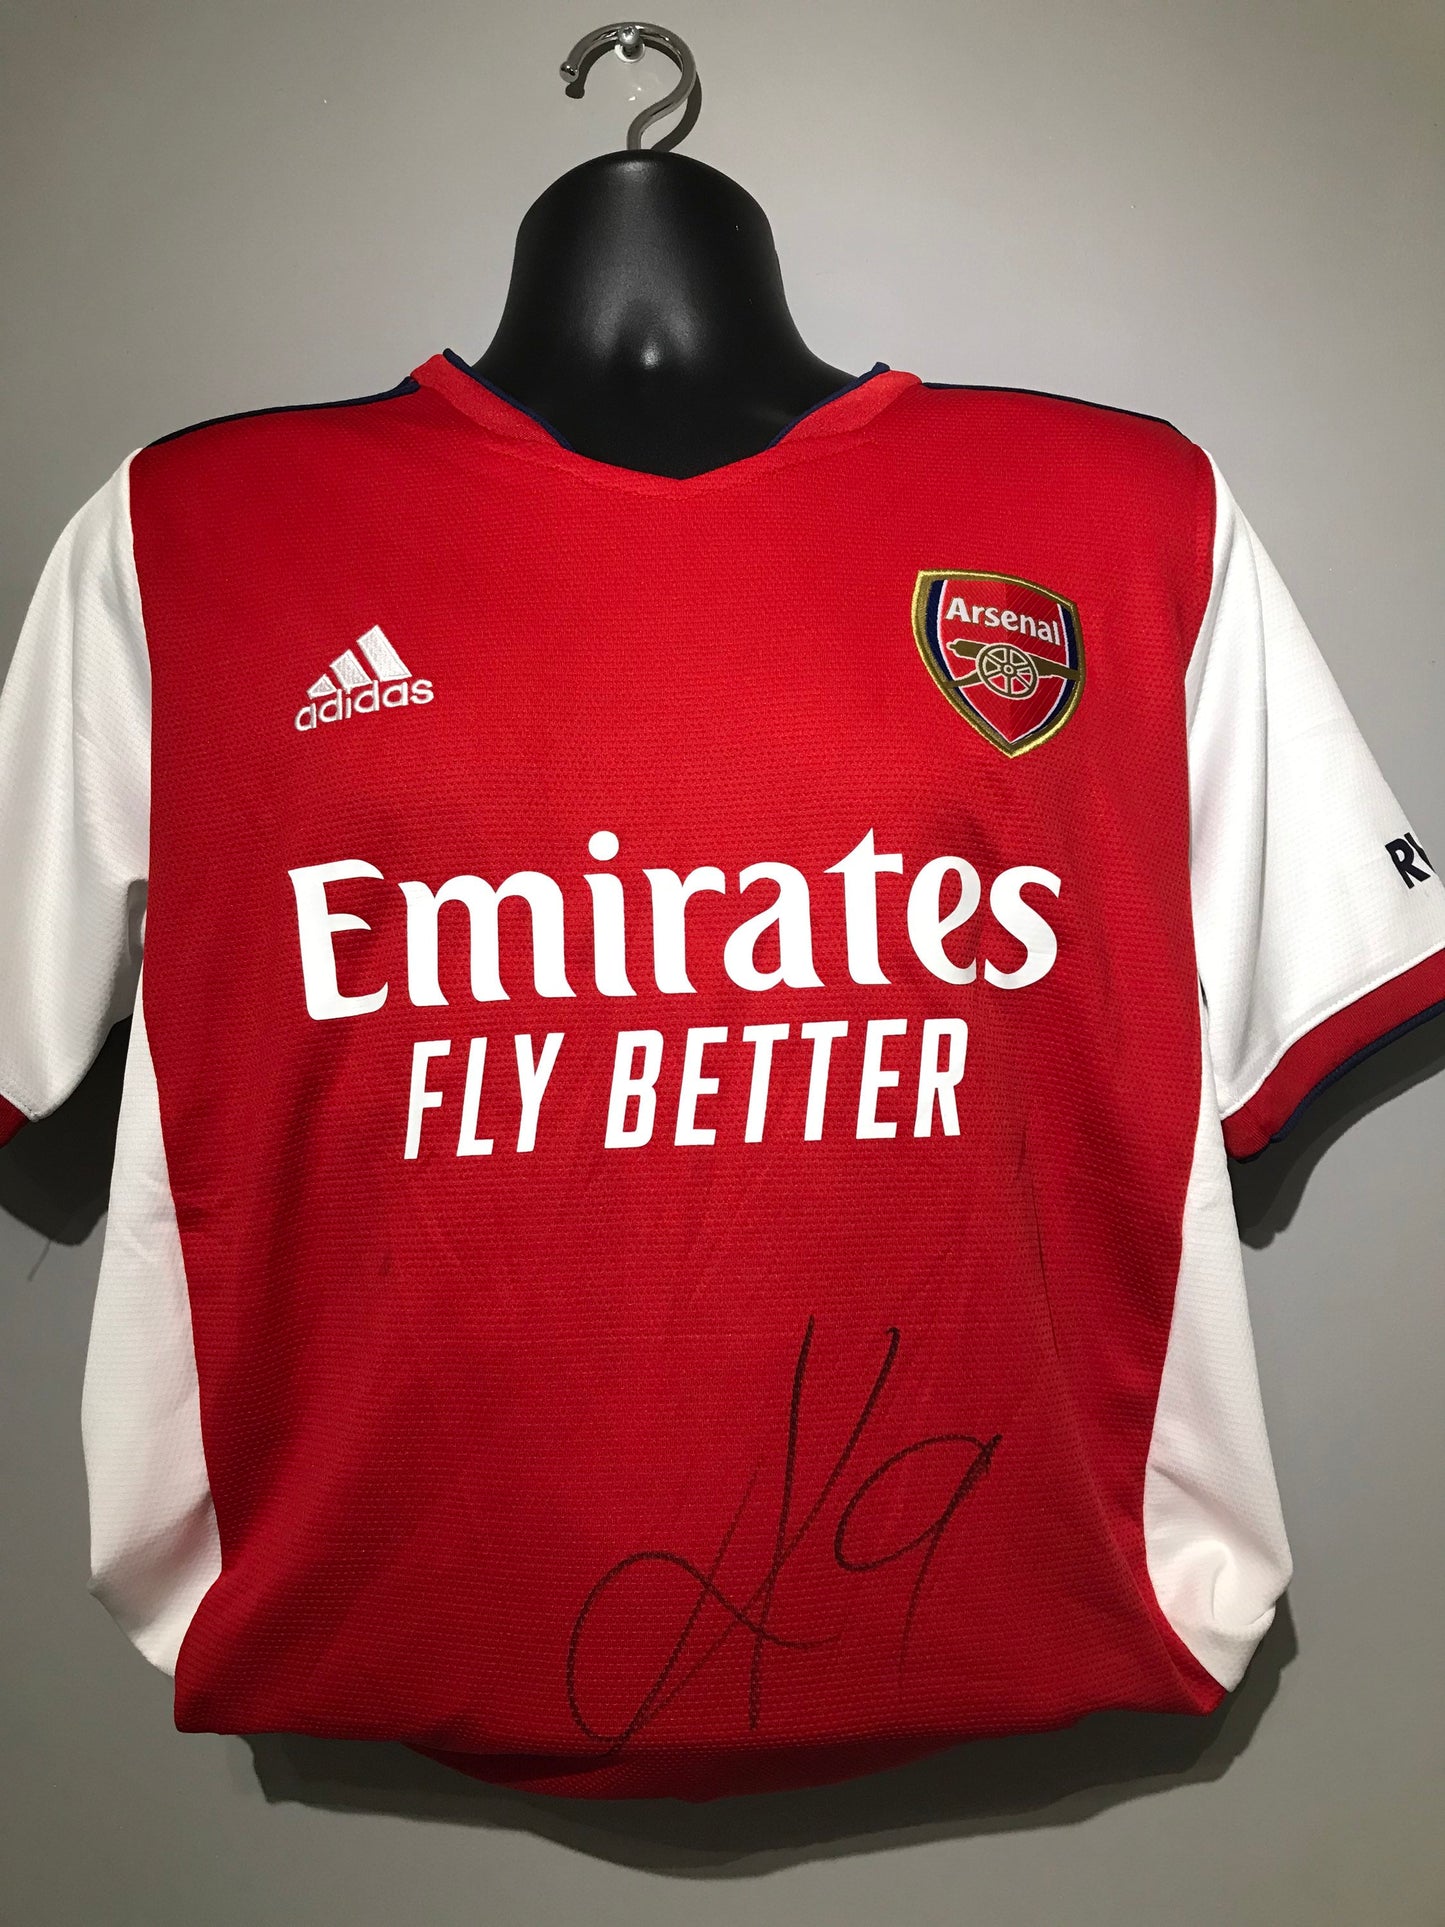 Alexandre Lacazette - Arsenal FC - hand-signed replica shirt - AFC memorabilia, football shirt (UNFRAMED)